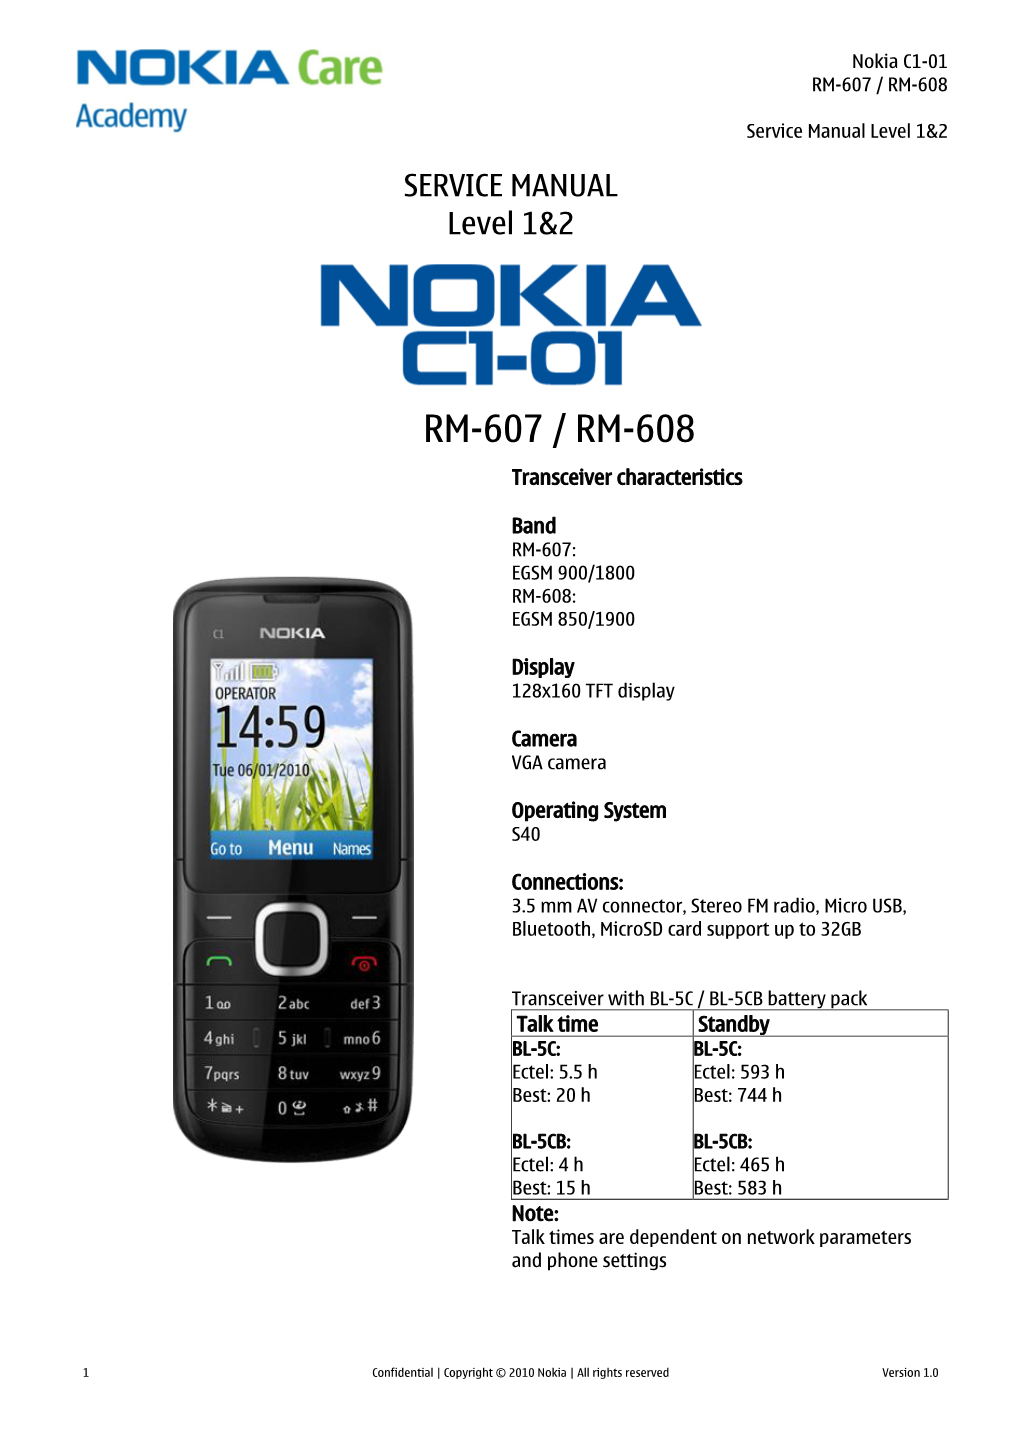 Nokia C1-01 RM-607 / RM-608 Service Manual Level 1&2